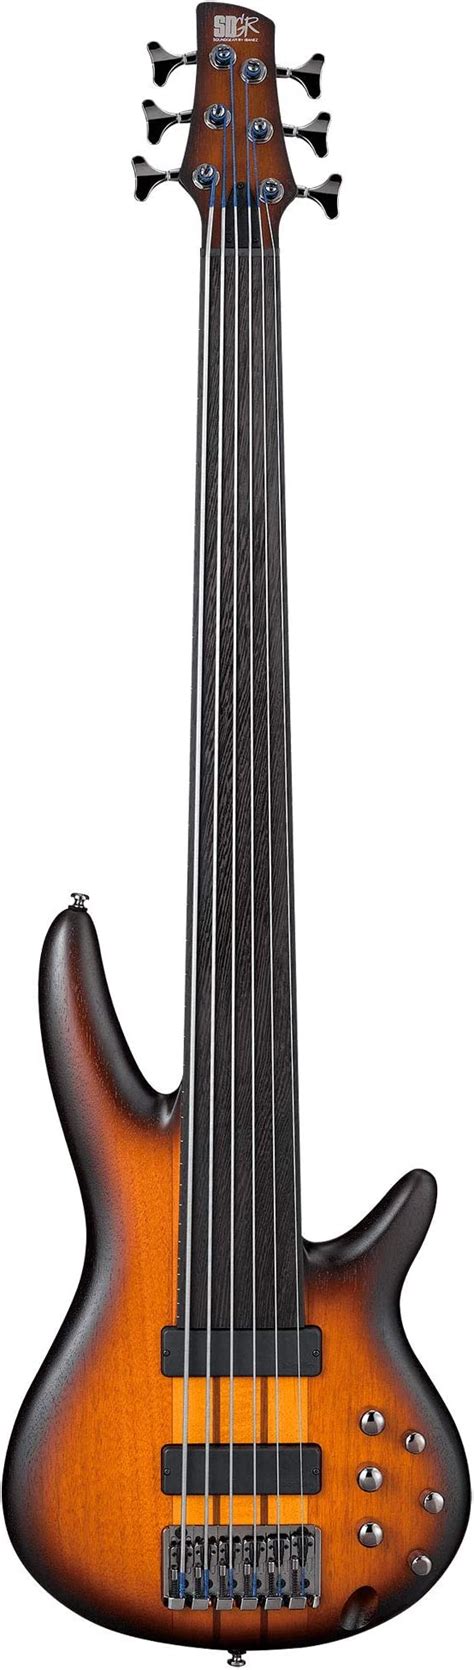 Ibanez Srf706 6 String Fretless Electric Bass Guitar Flat